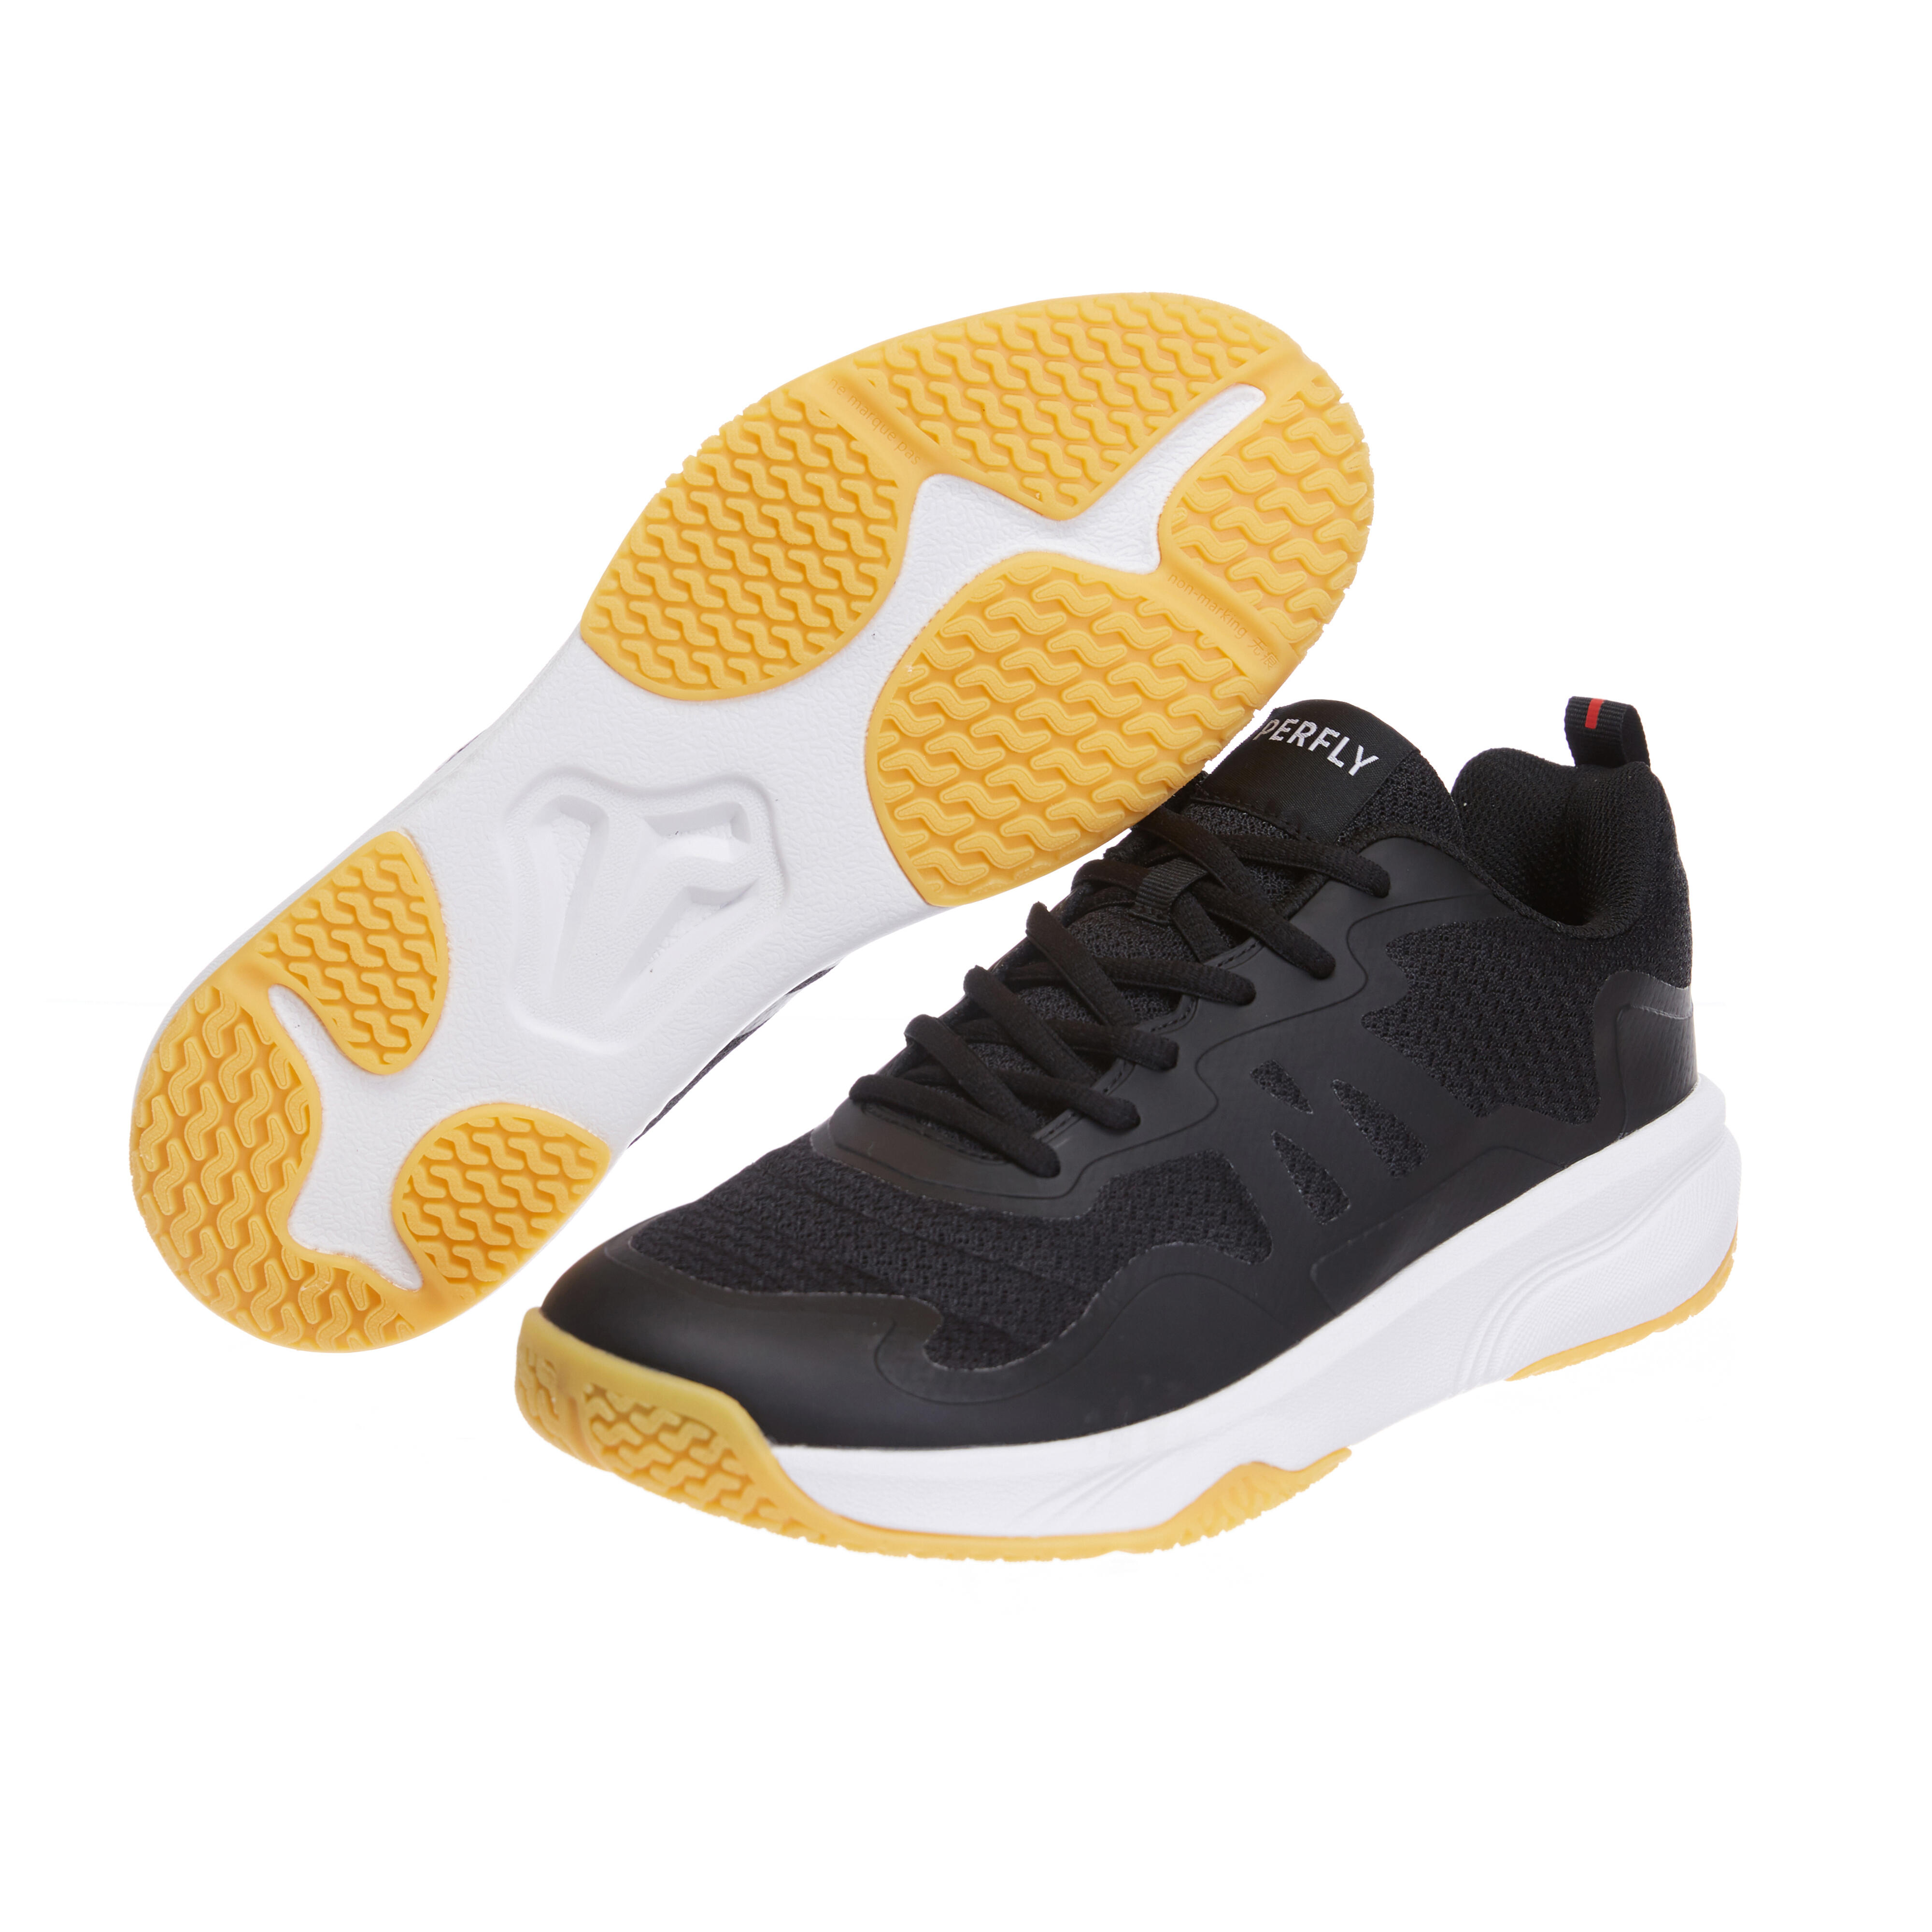 Men’s Badminton Shoes - Sensation 530 Black - black - Perfly - Decathlon